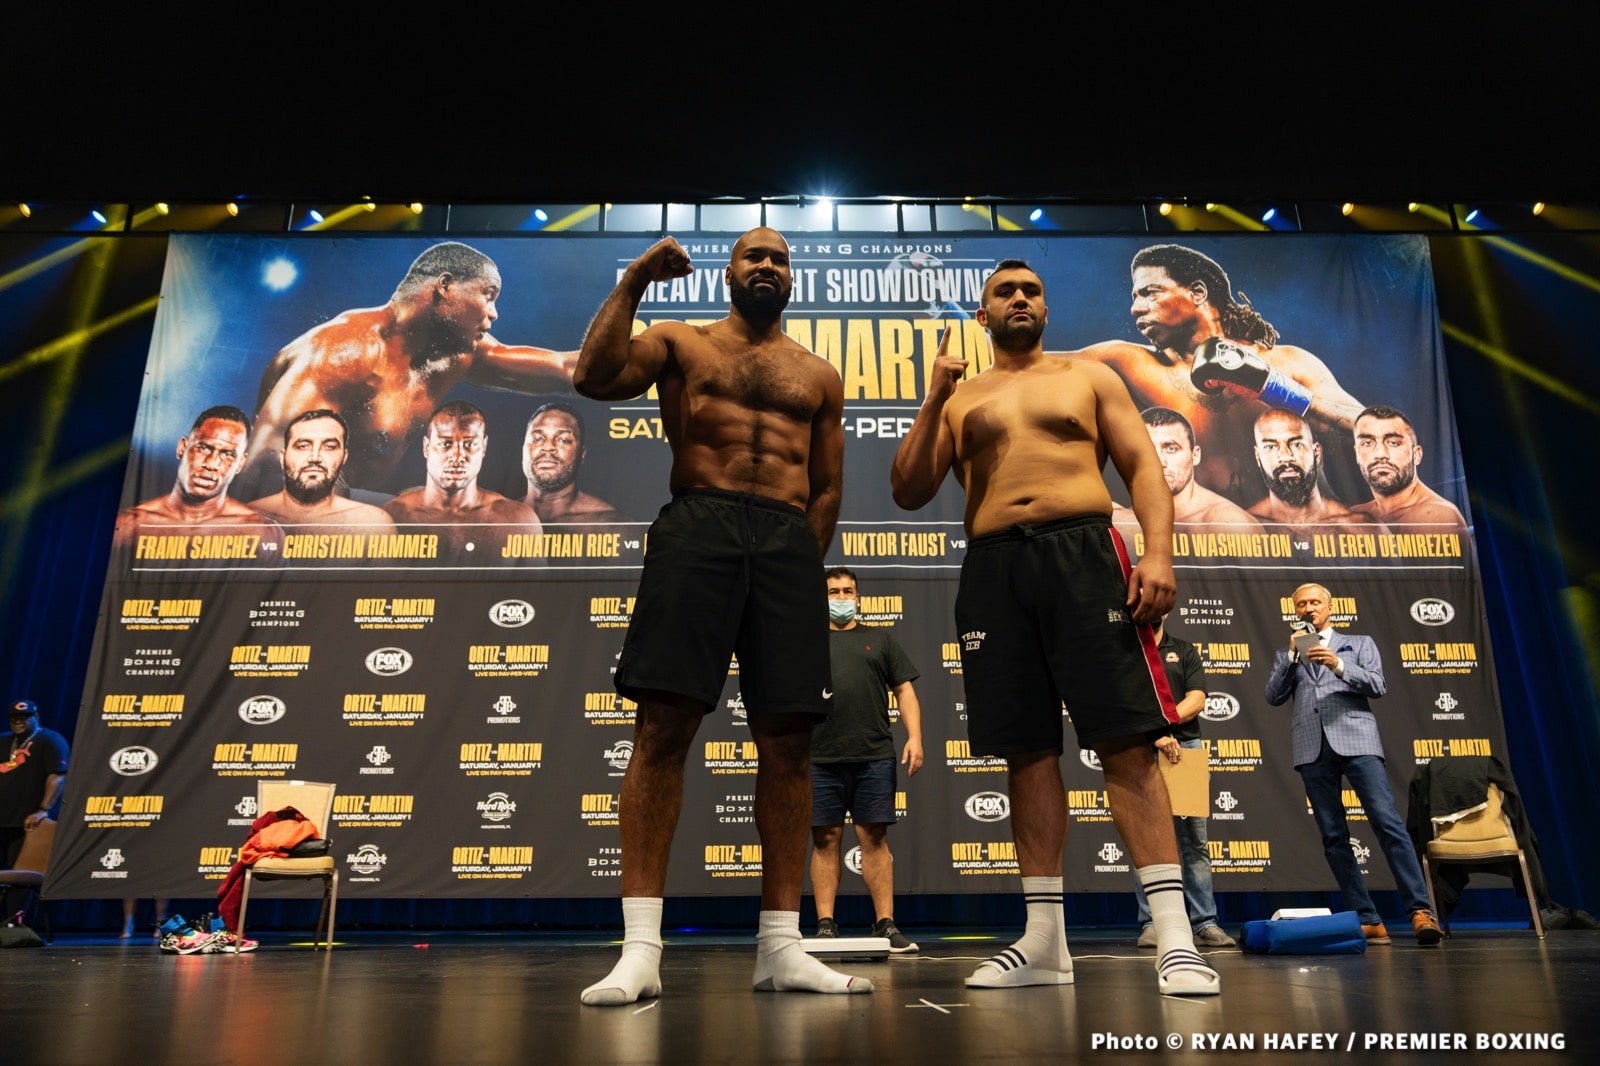 Luis Ortiz vs. Charles Martin & Frank Sanchez vs. Christian Hammer Weights